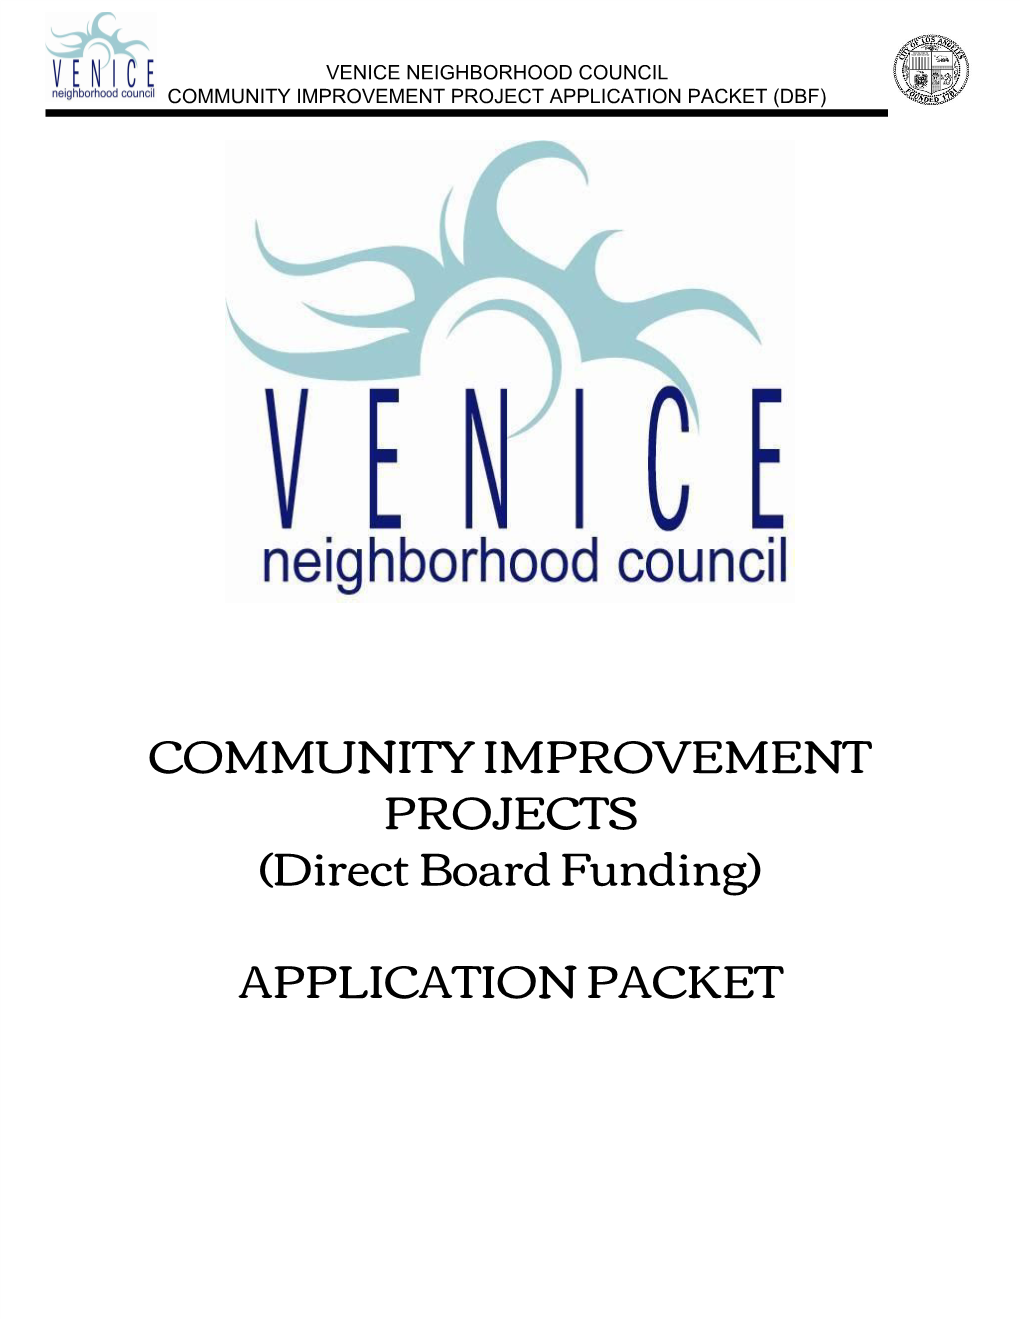 Venice Neighborhood Council Community